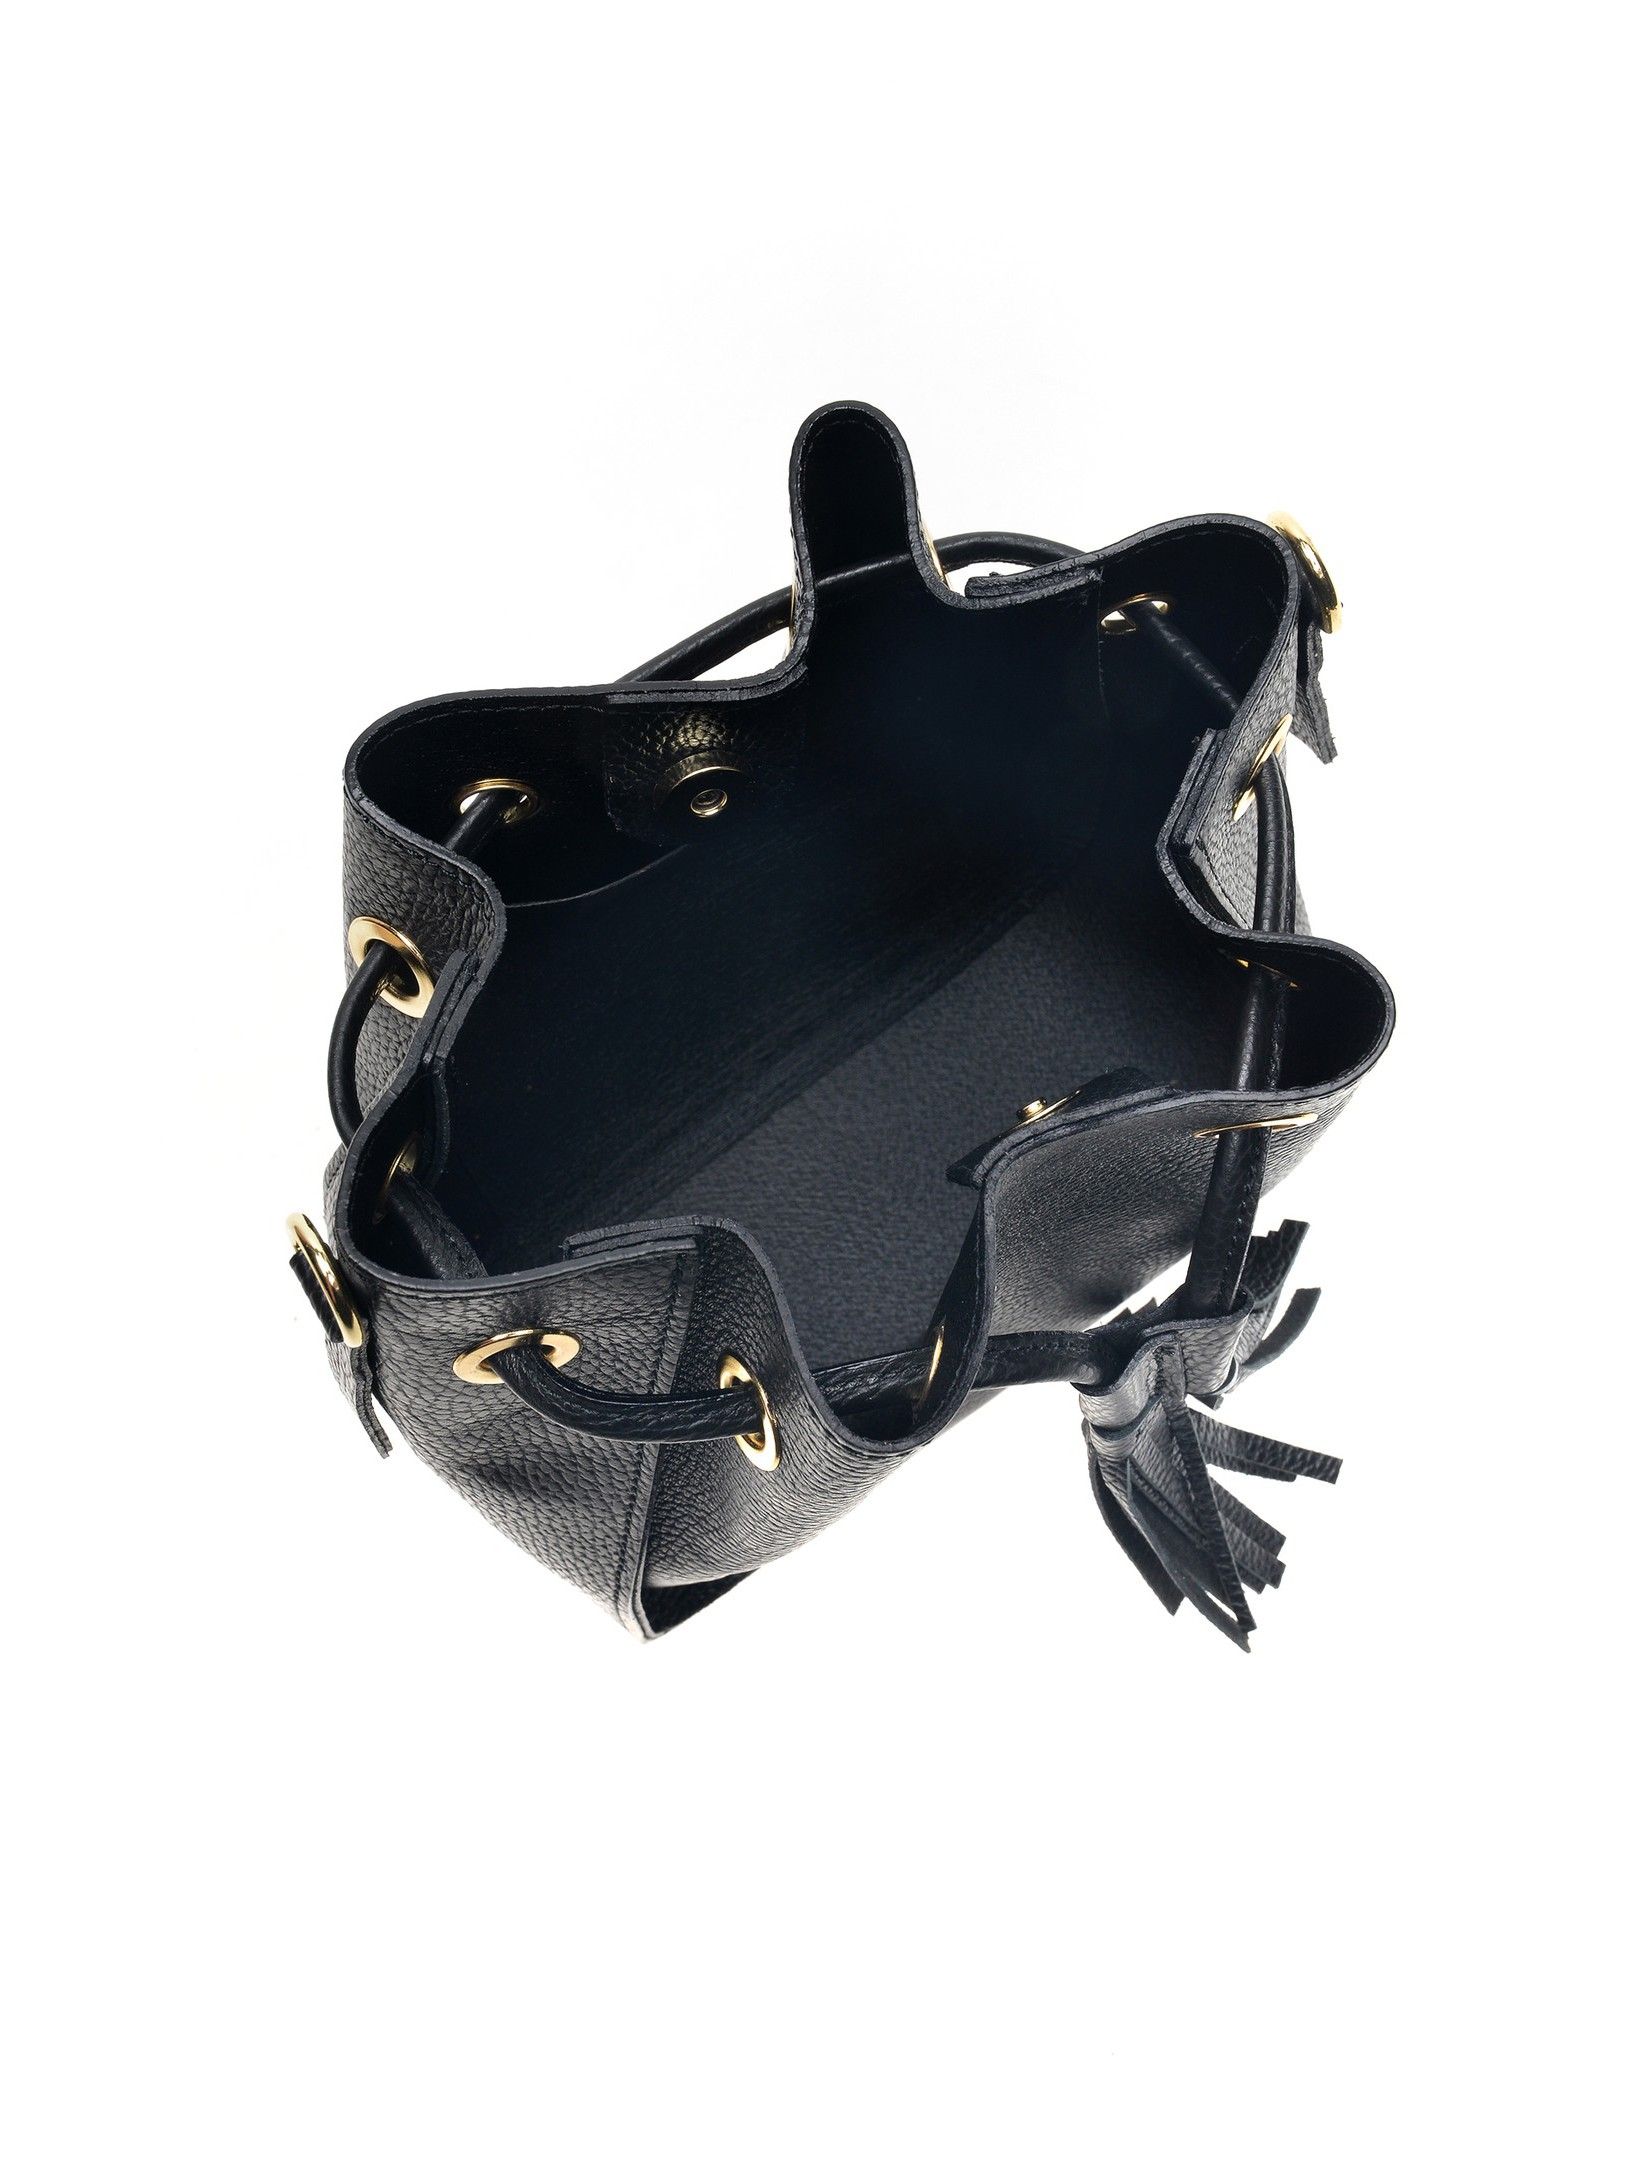 Shoulder Bag
100% cow leather
Top drawstring closure with tassel
Shoulder strap: 120 cm
Dimensions (L): 23.5x24x11 cm